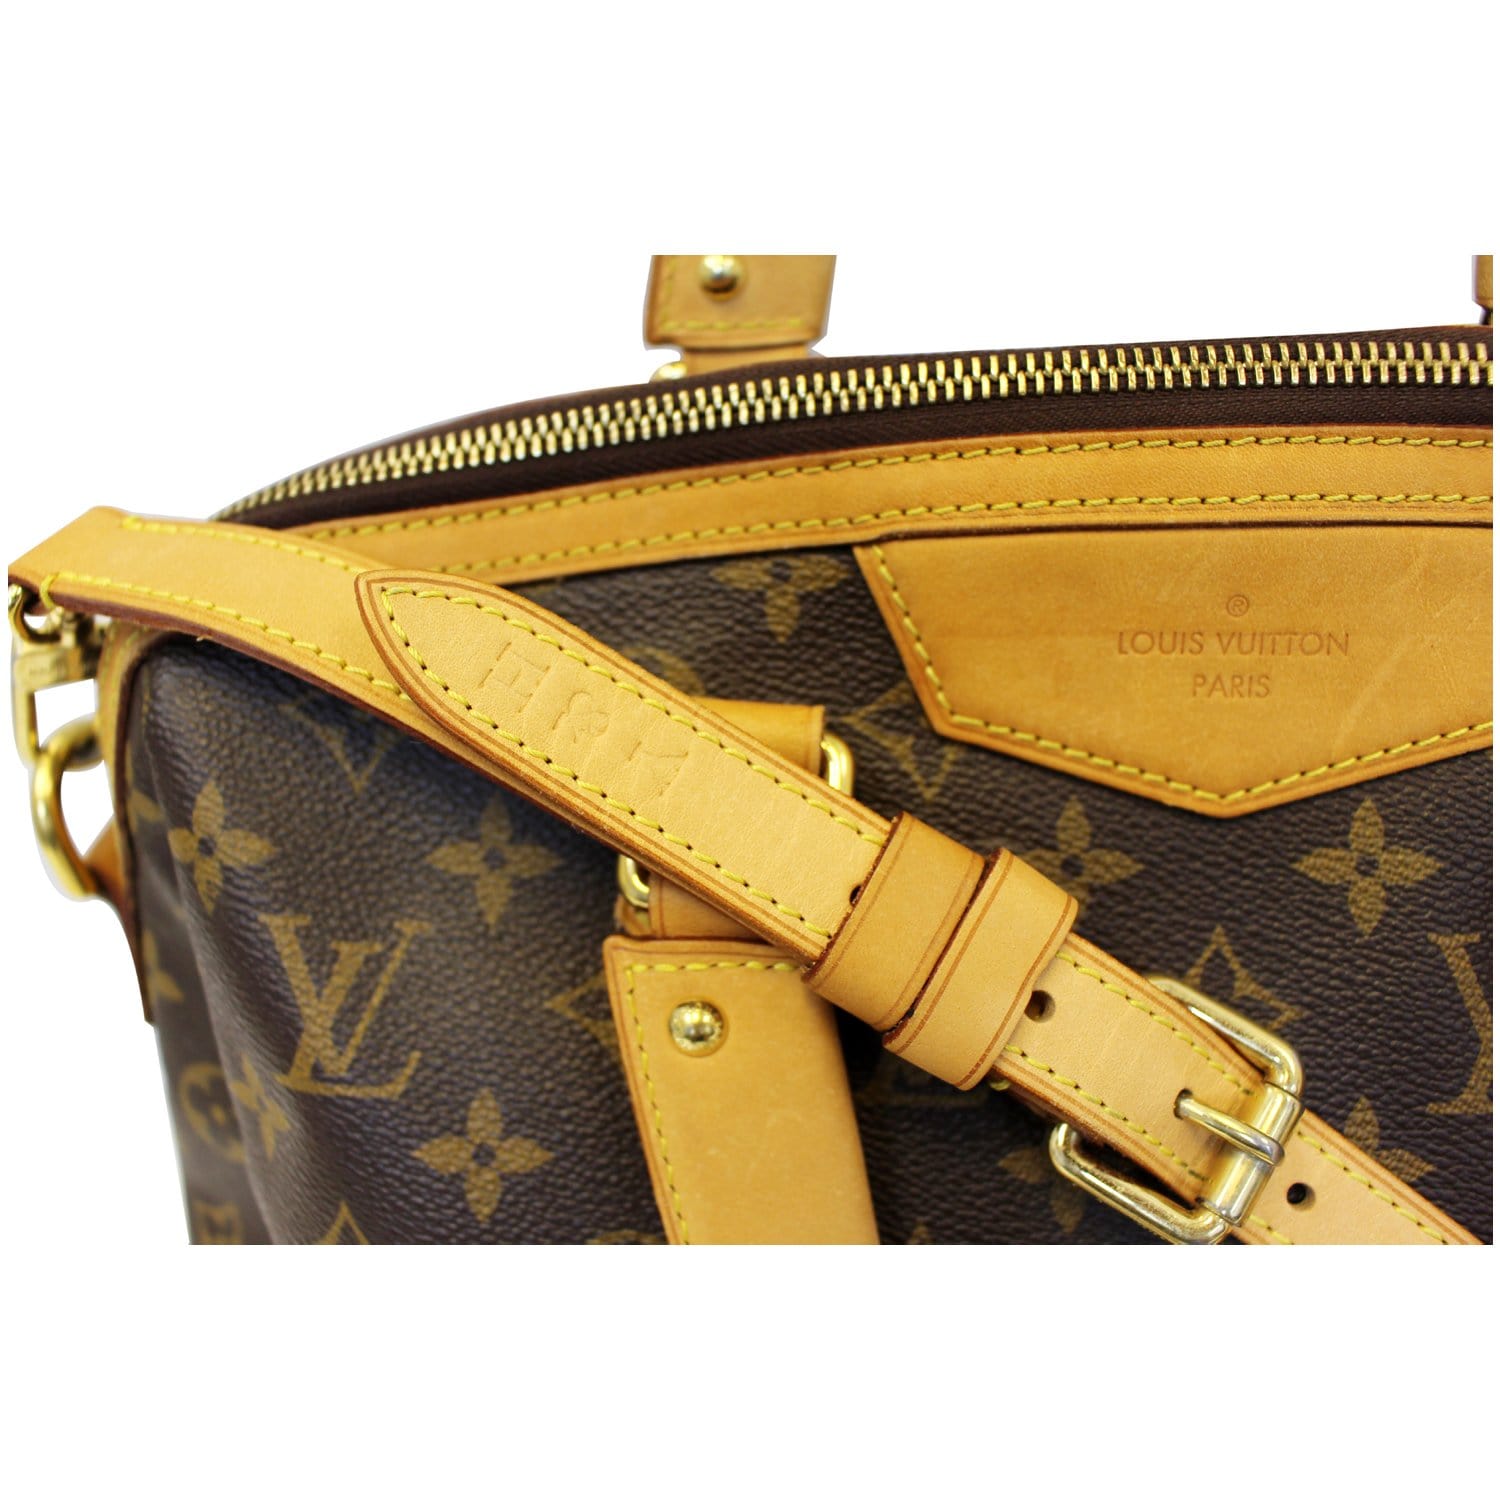 5 Steps to Spot Fakes: Louis Vuitton Belt 